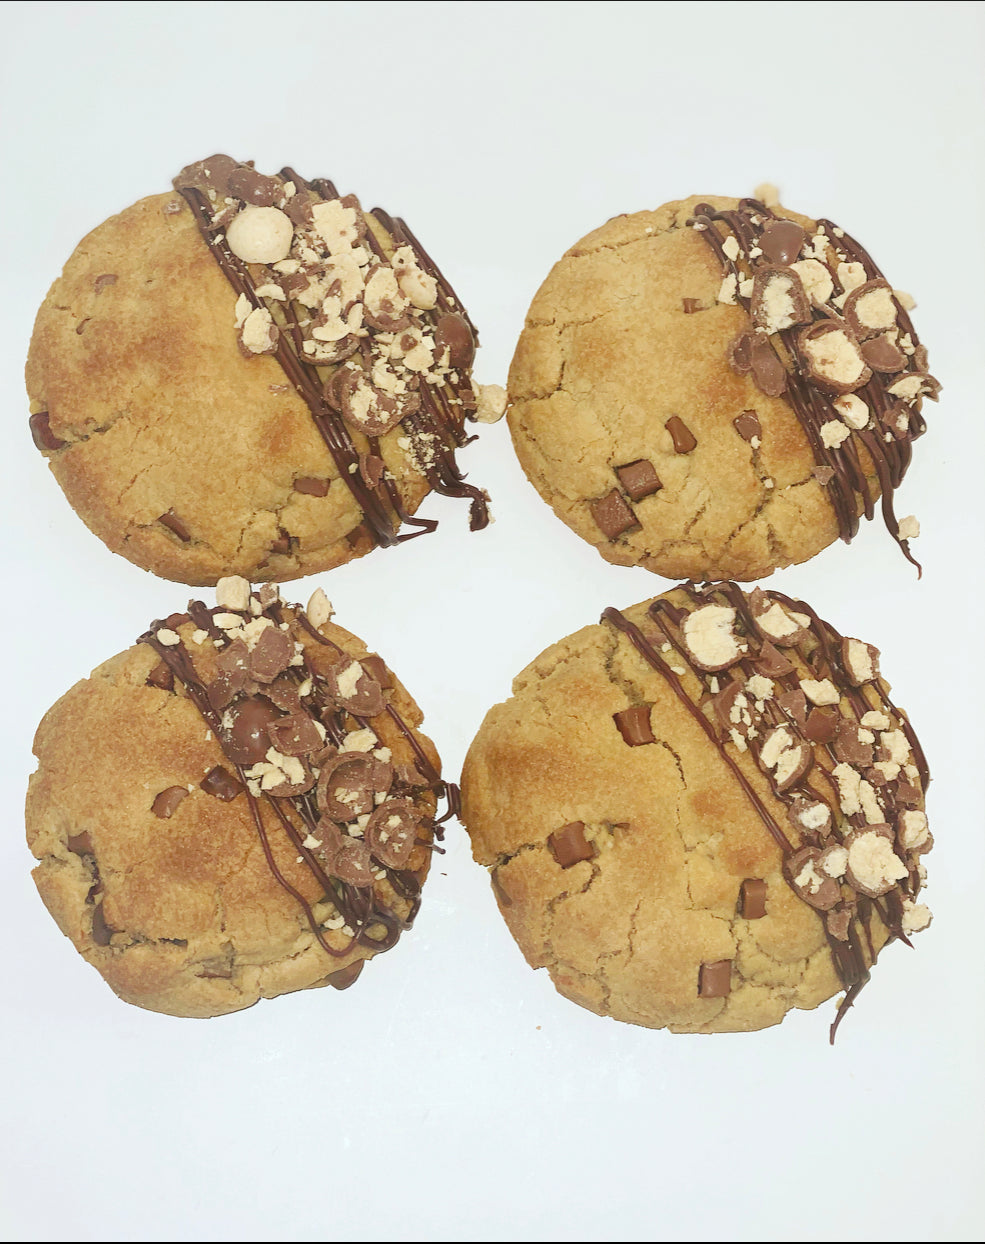 Malteser Stuffed Cookies